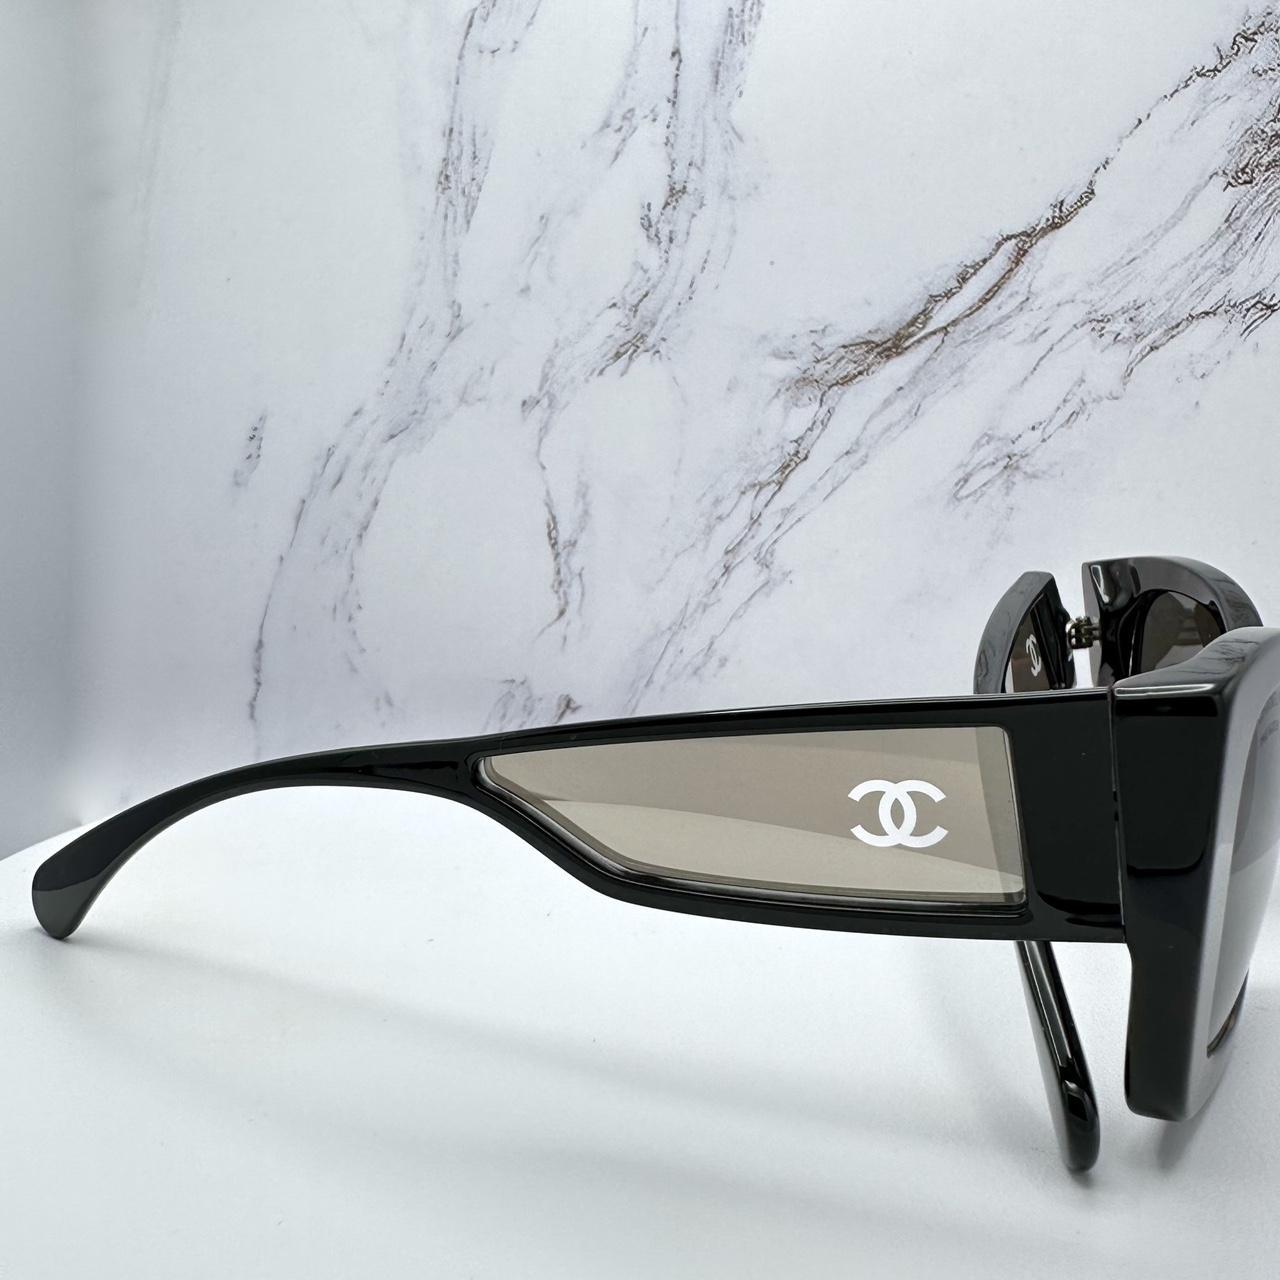 Chanel Men's Sunglasses - Black